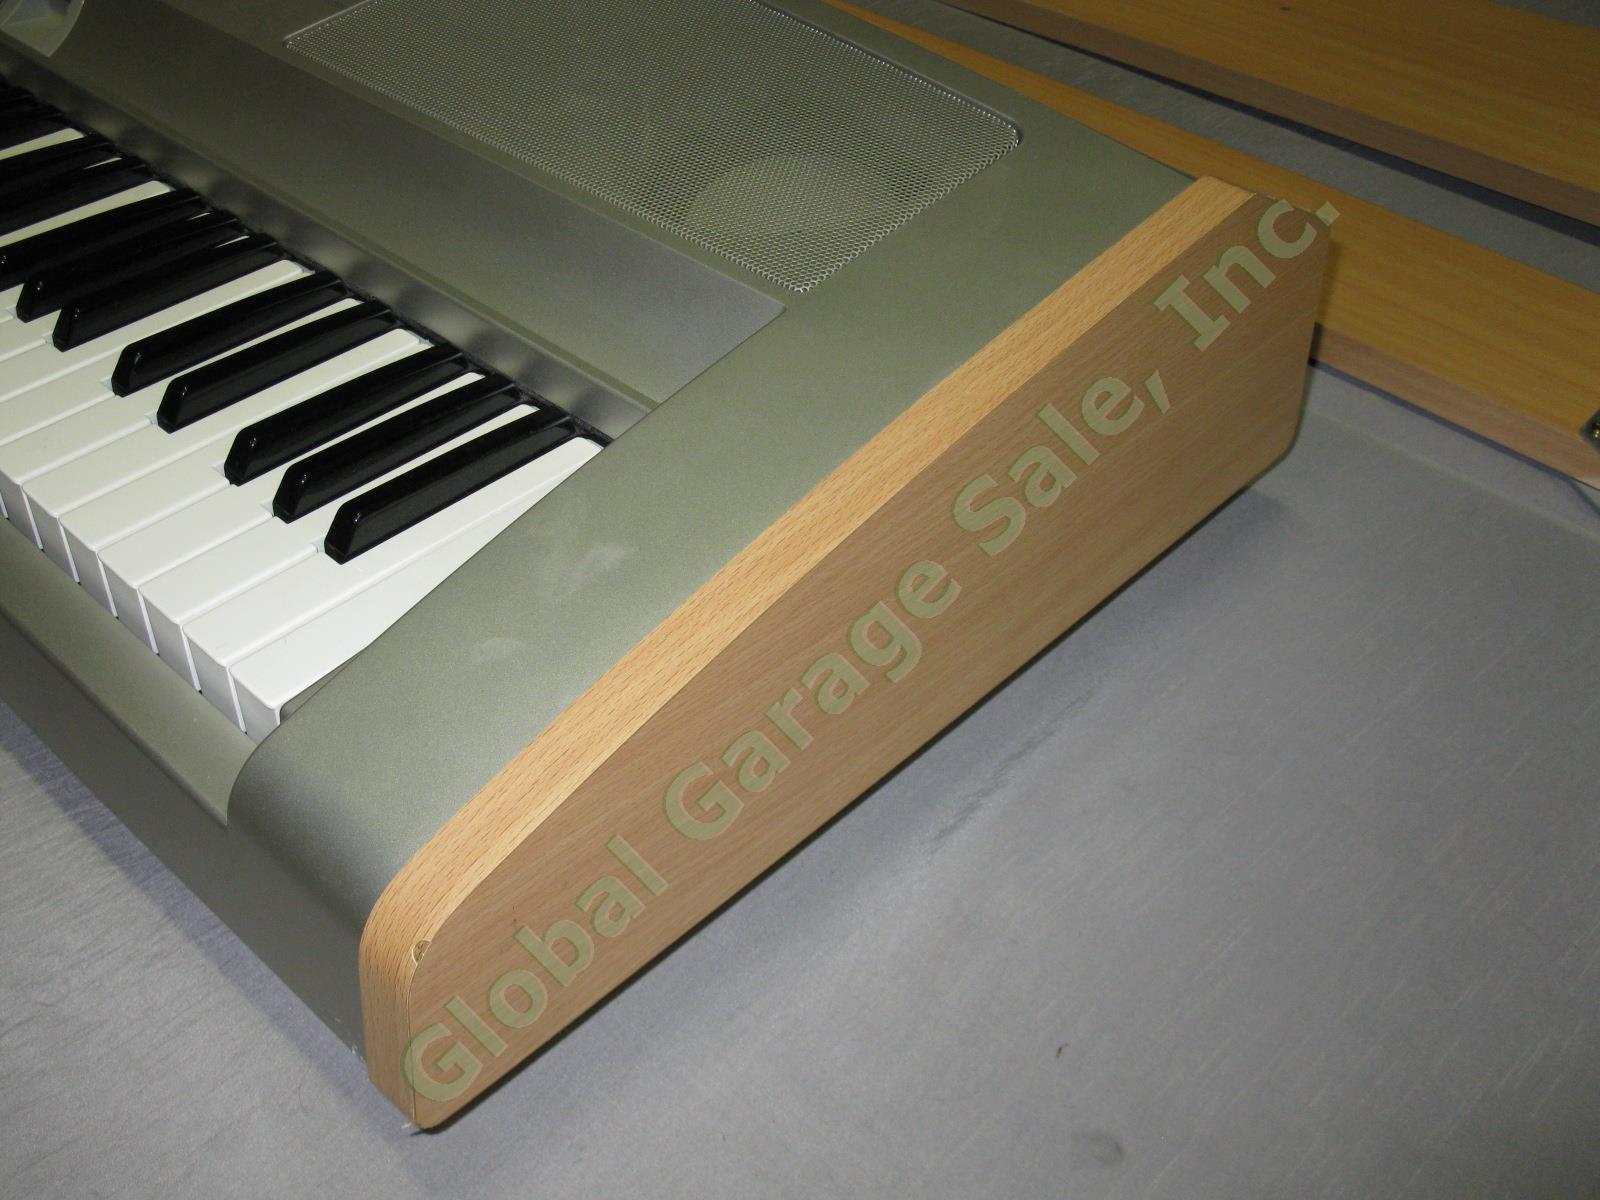 PICKUP ONLY Yamaha DGX-505 Portable Grand Piano Keyboard W/ Stand Power Supply + 7